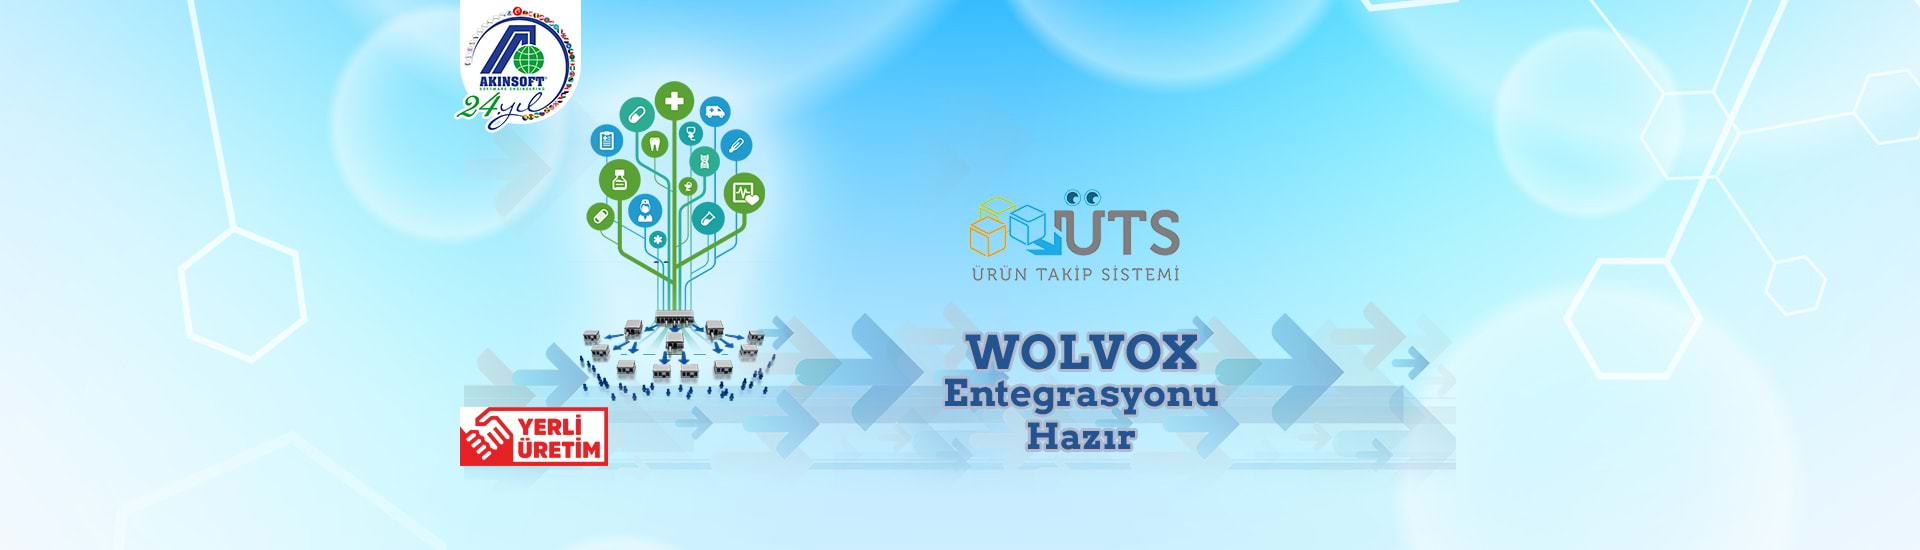 Akınsoft Wolwox ÜTS Ürün Takip Sistemi